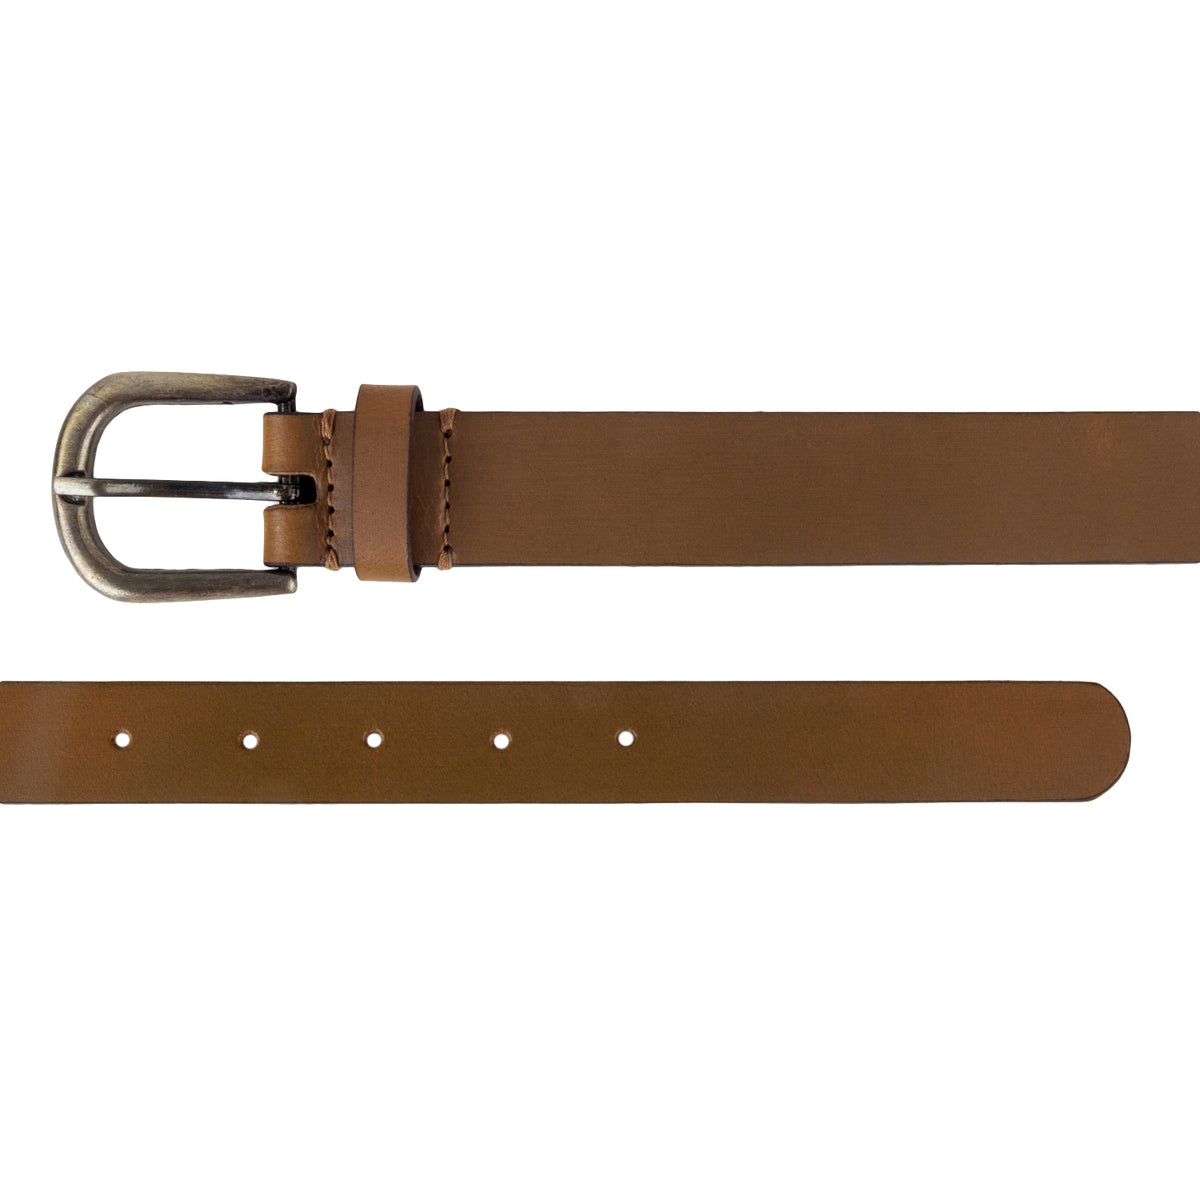 Two-tone tan genuine leather belt